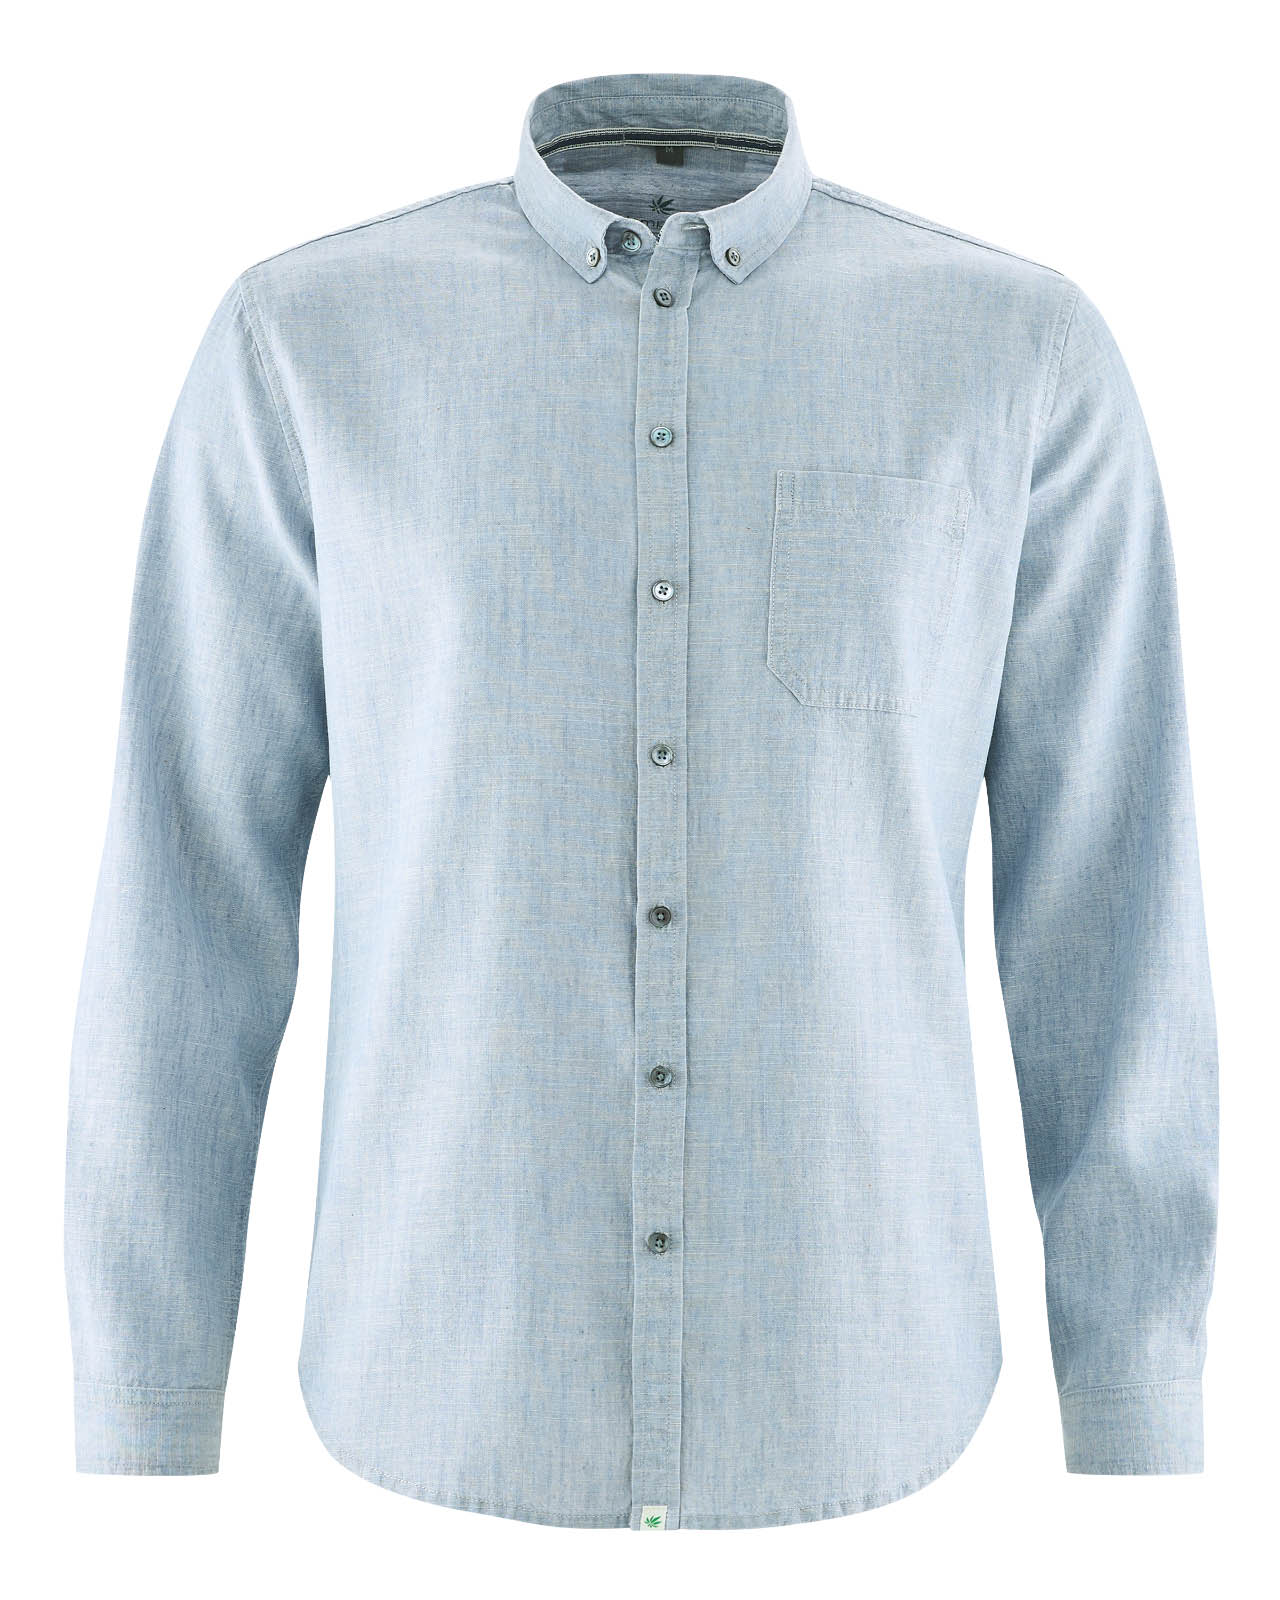 DH059 Buttondown shirt, woven